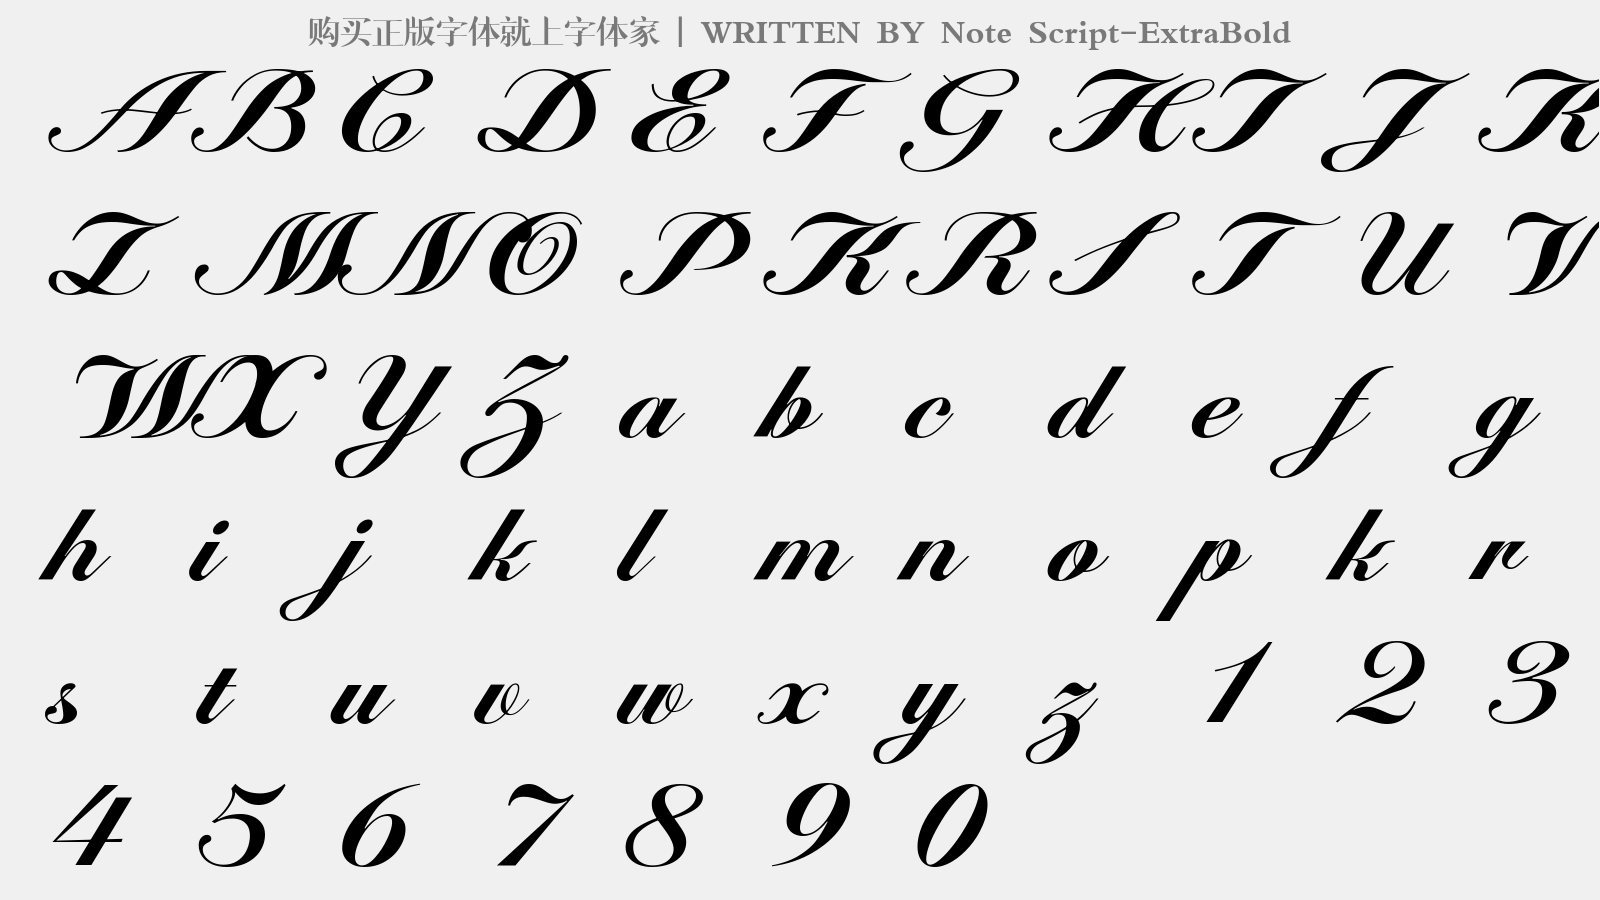 Note Script-ExtraBold - 大写字母/小写字母/数字